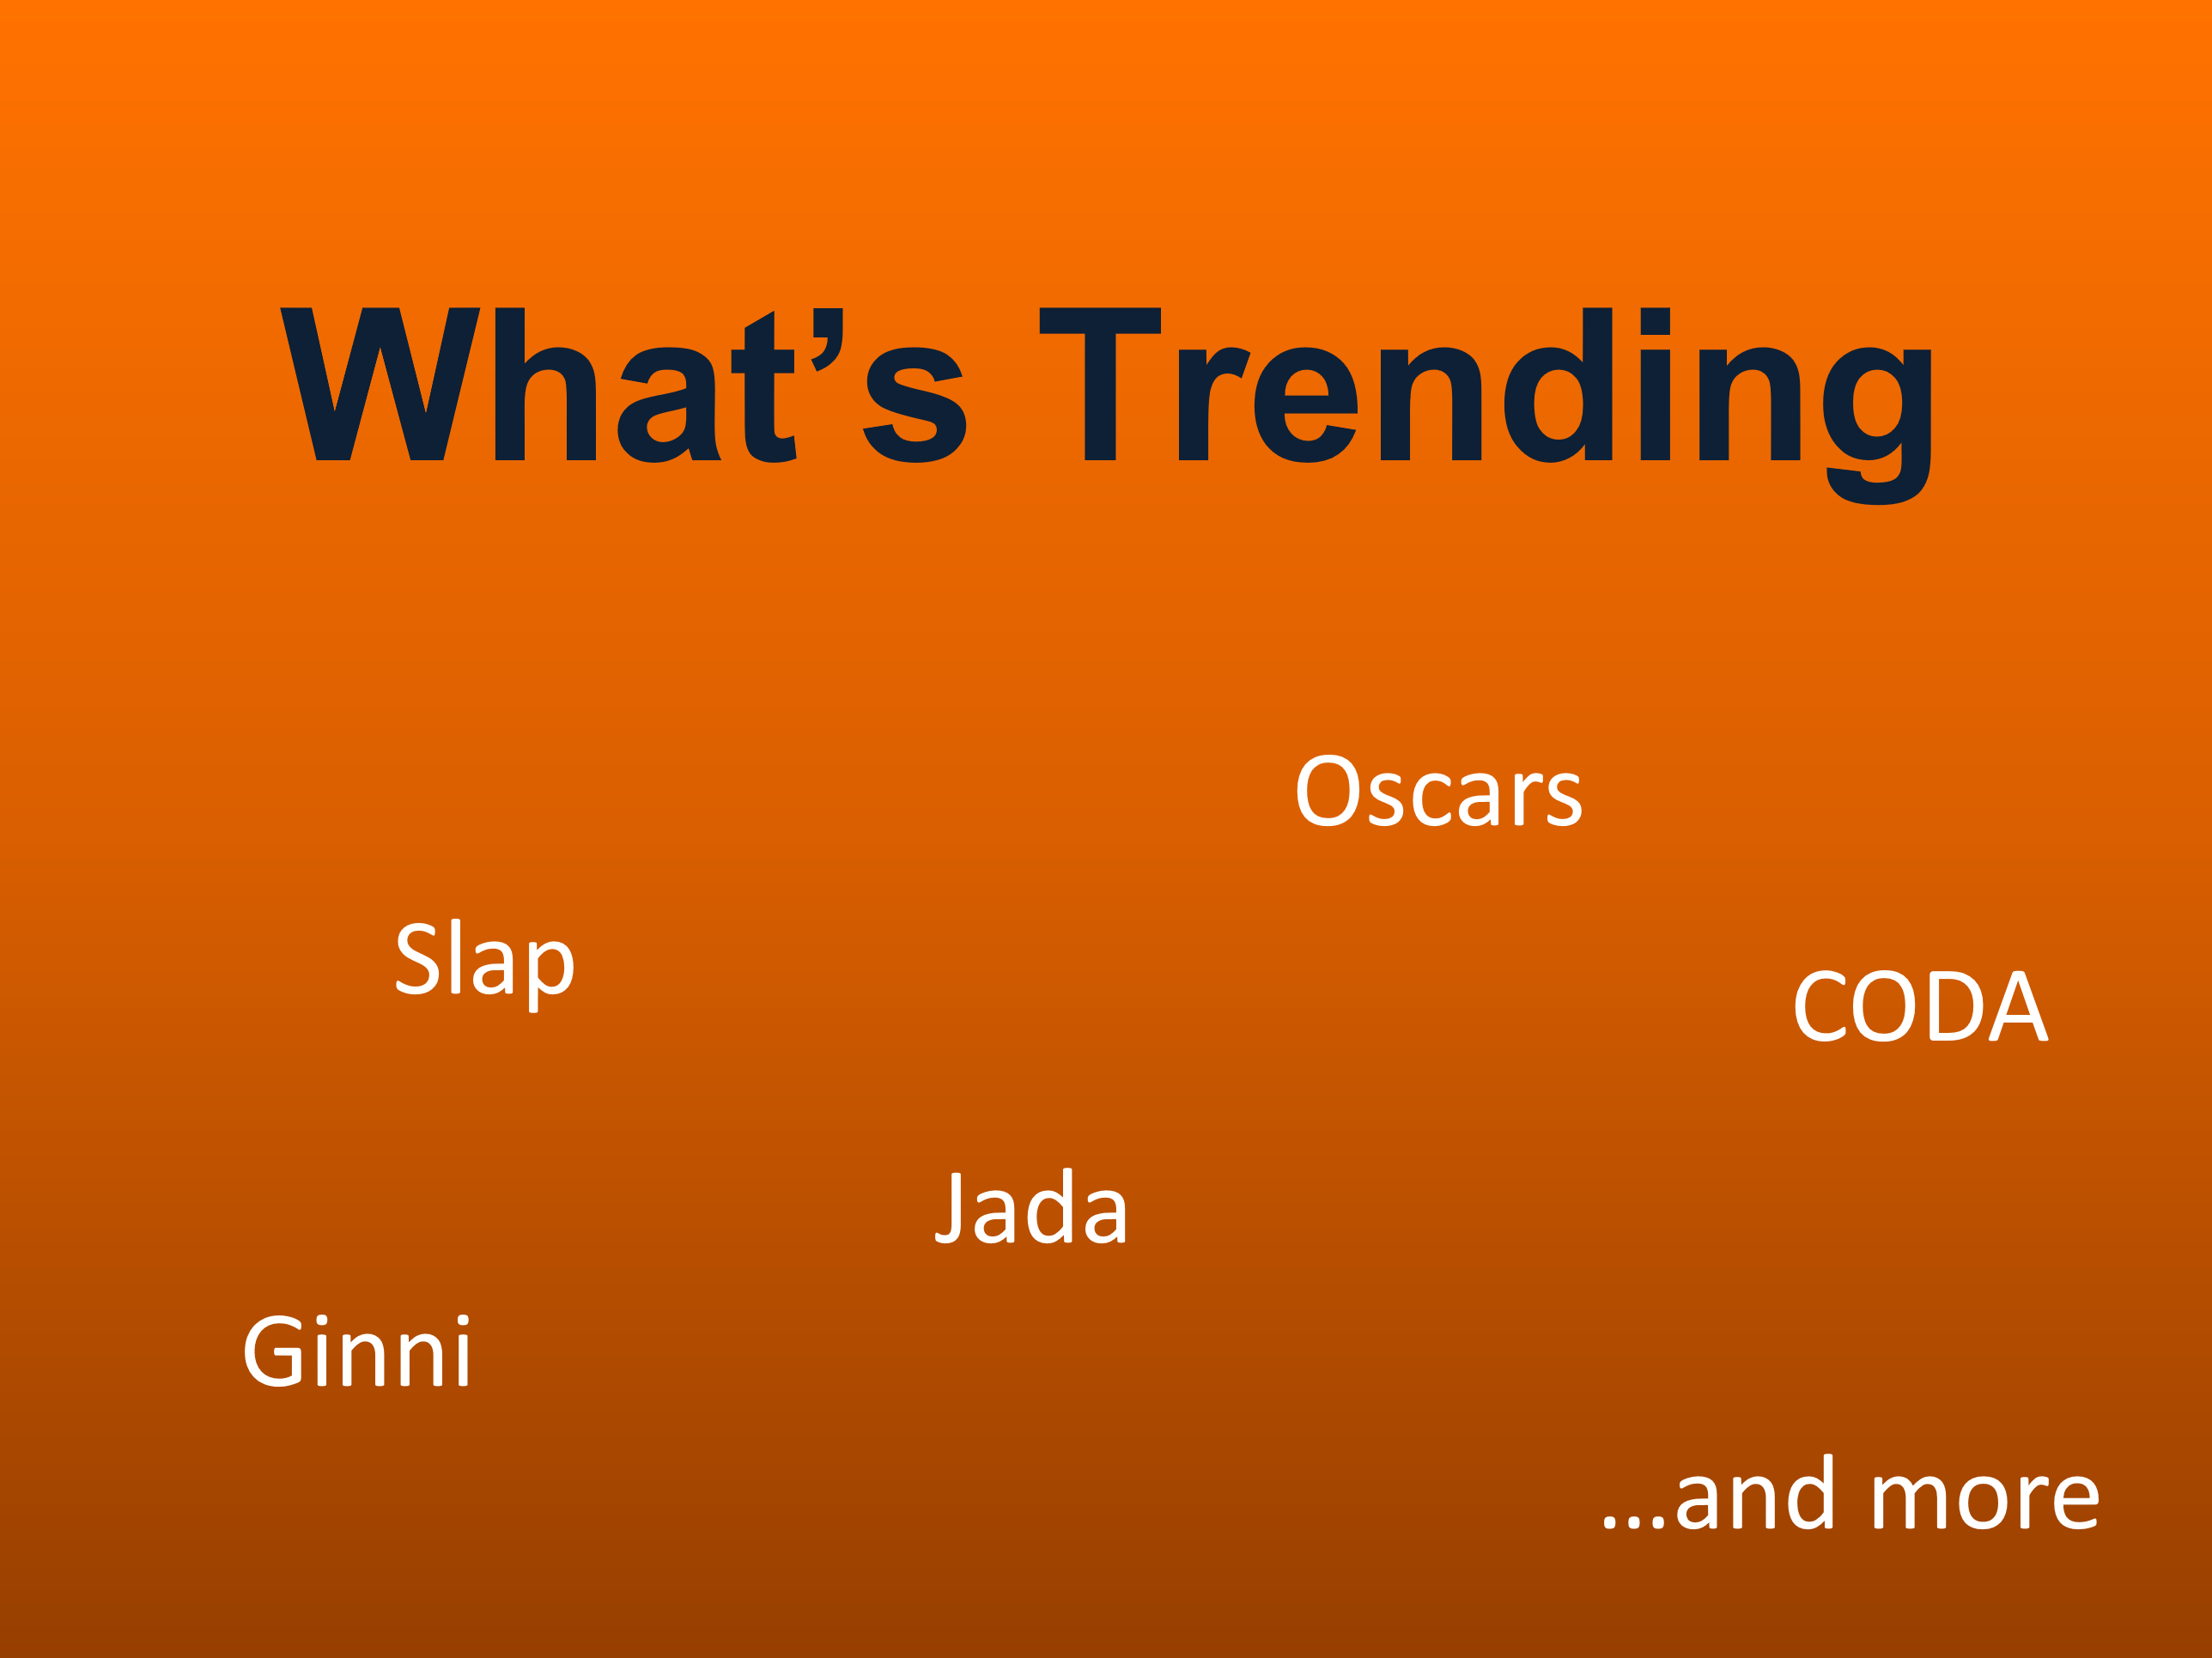 4/2/22 What's trending this week